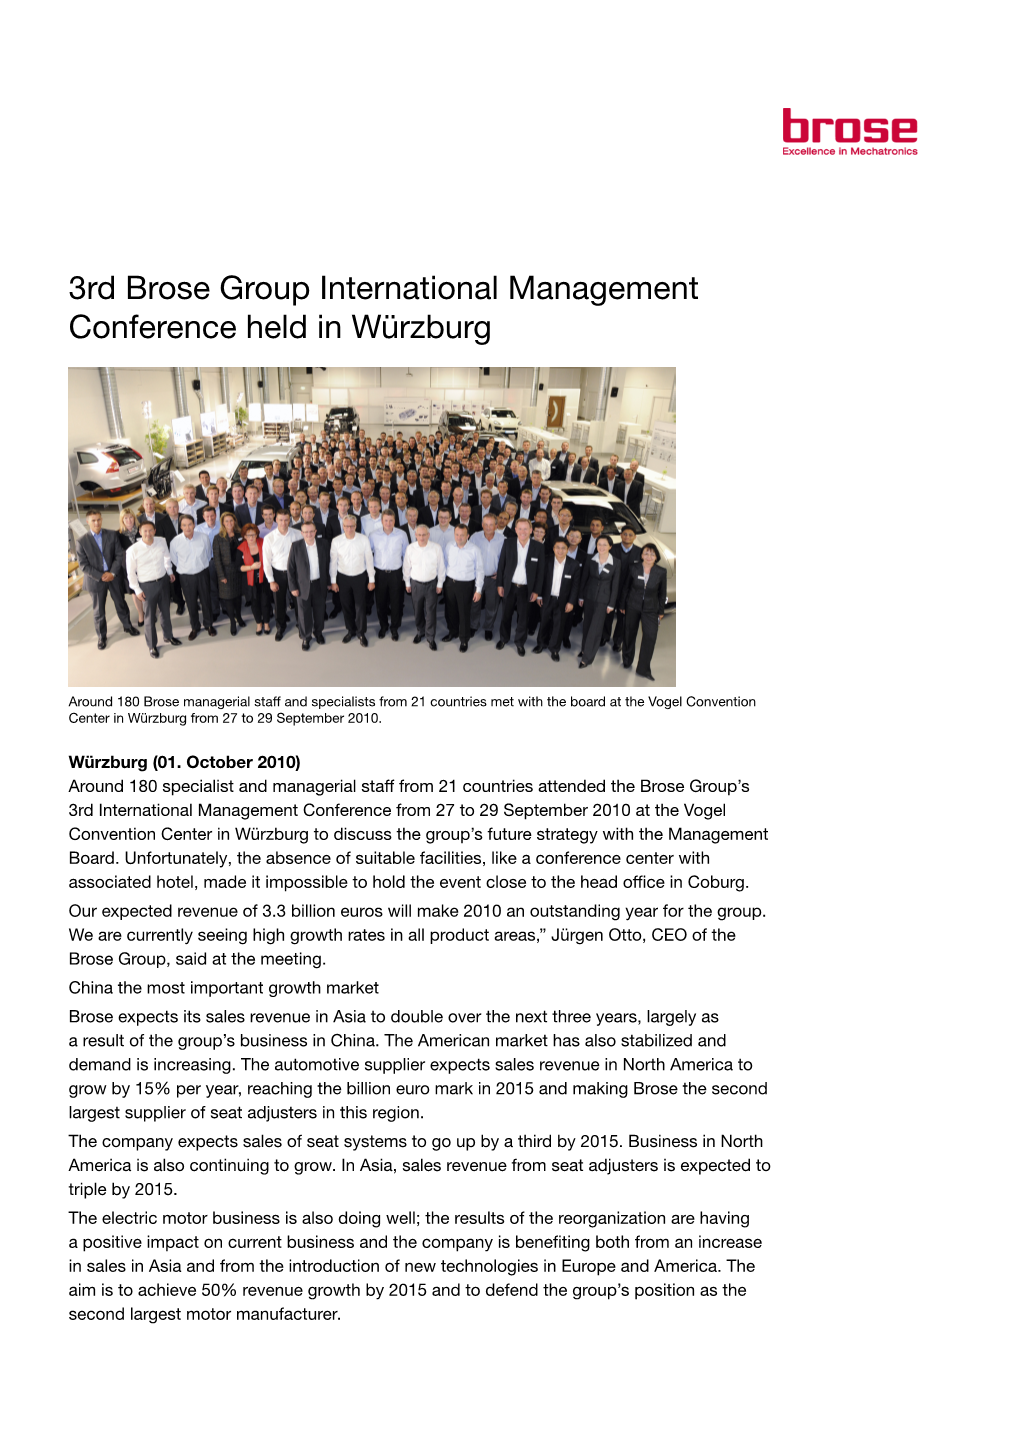 3Rd Brose Group International Management Conference Held in Würzburg